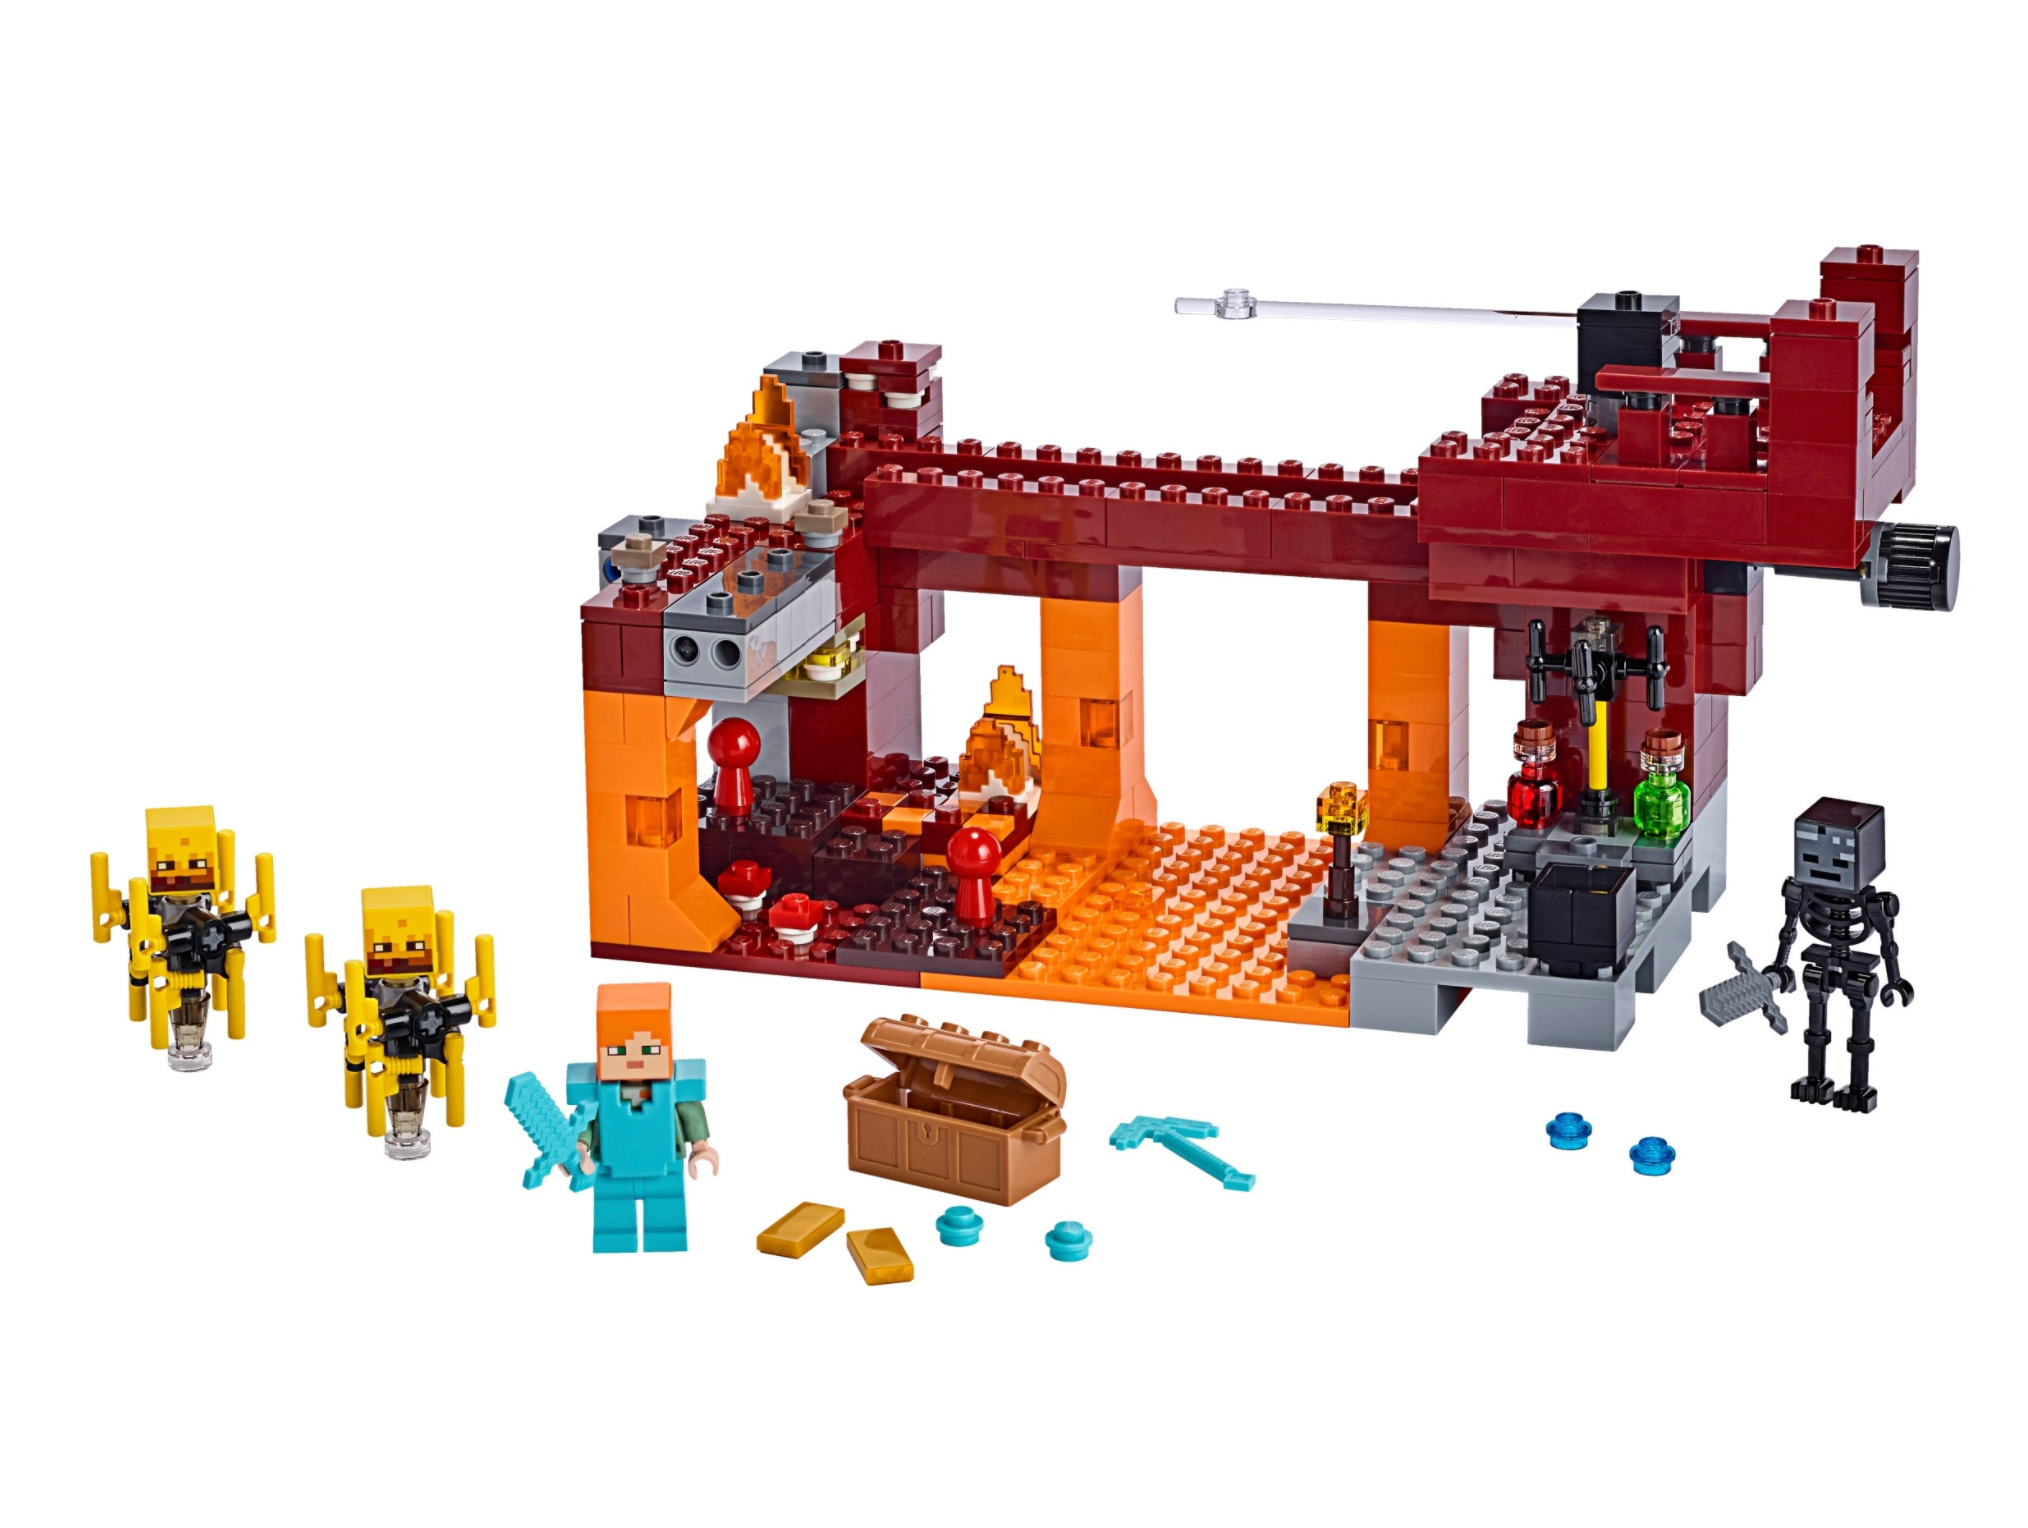 LEGO: Minecraft - The Blaze Bridge